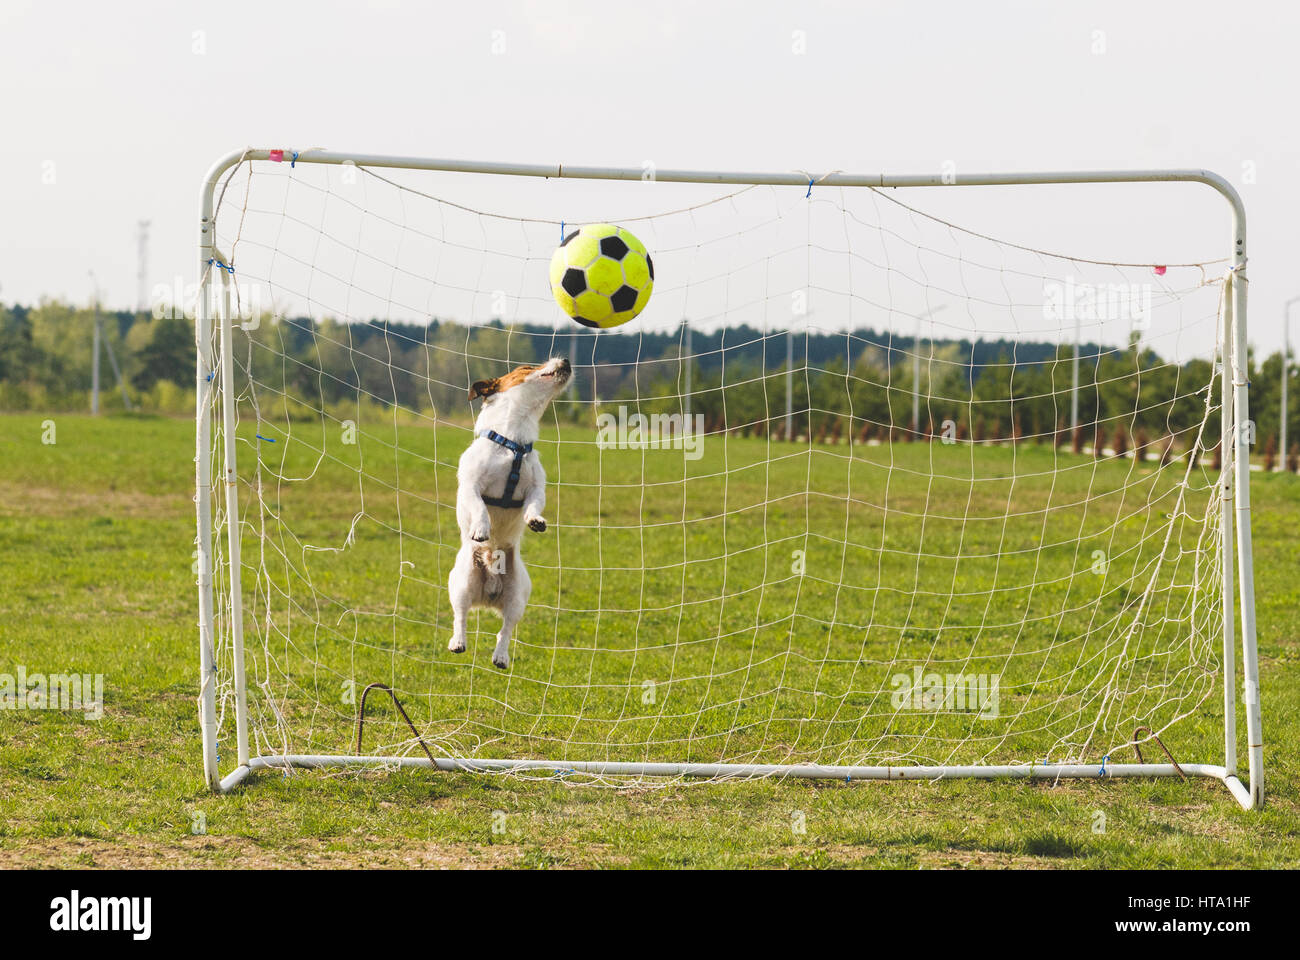 Funny dog catching a ball saving goal Stock Photo